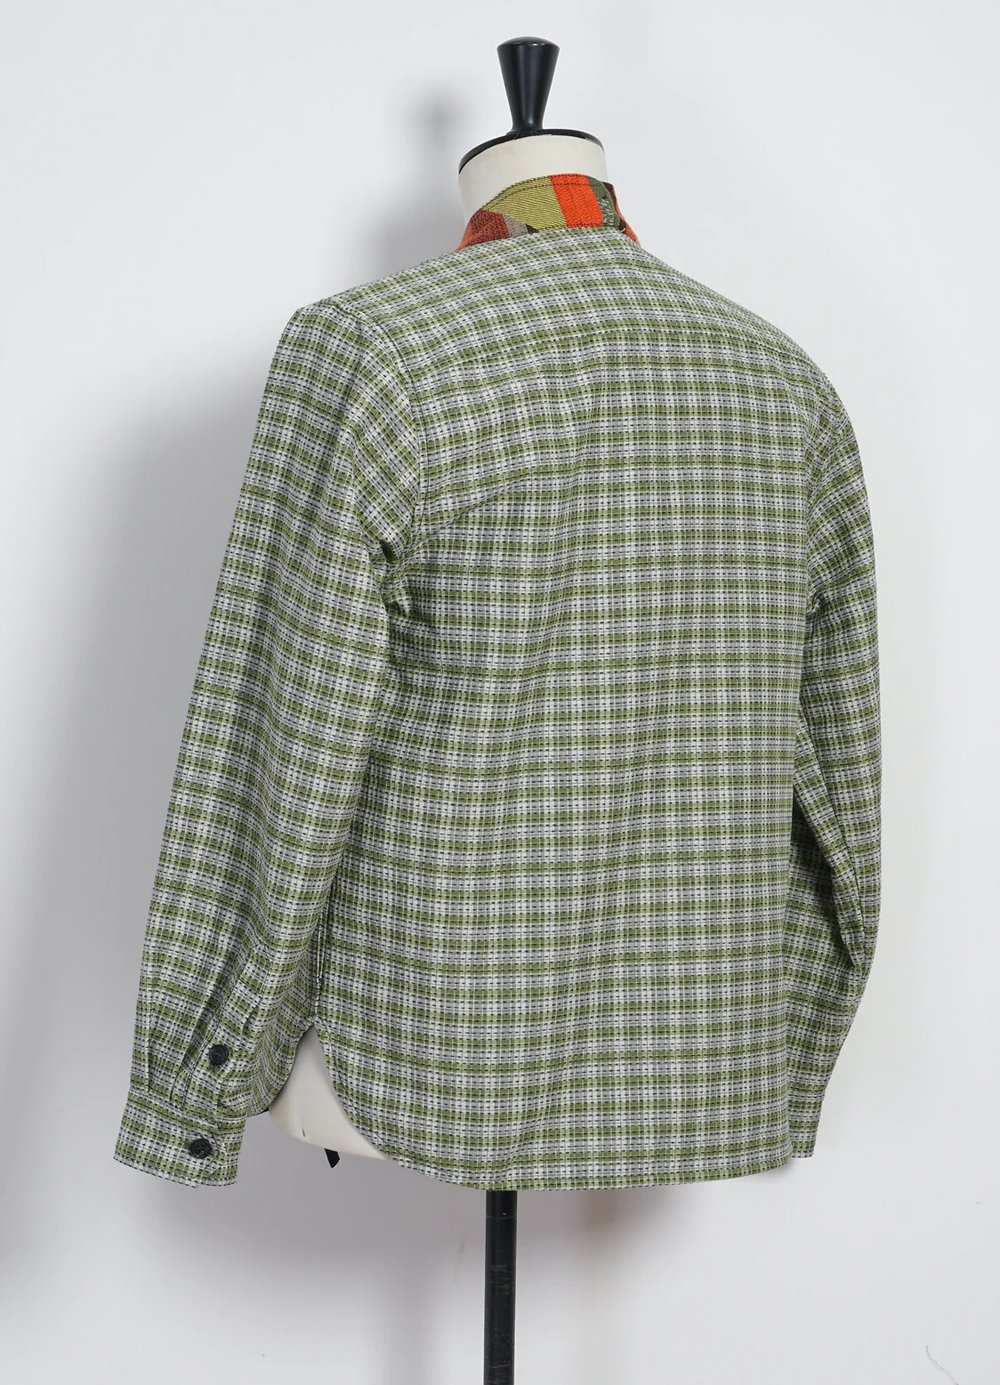 Hansen Garments REMY | East & West Shirt Jacket | sashiko green+